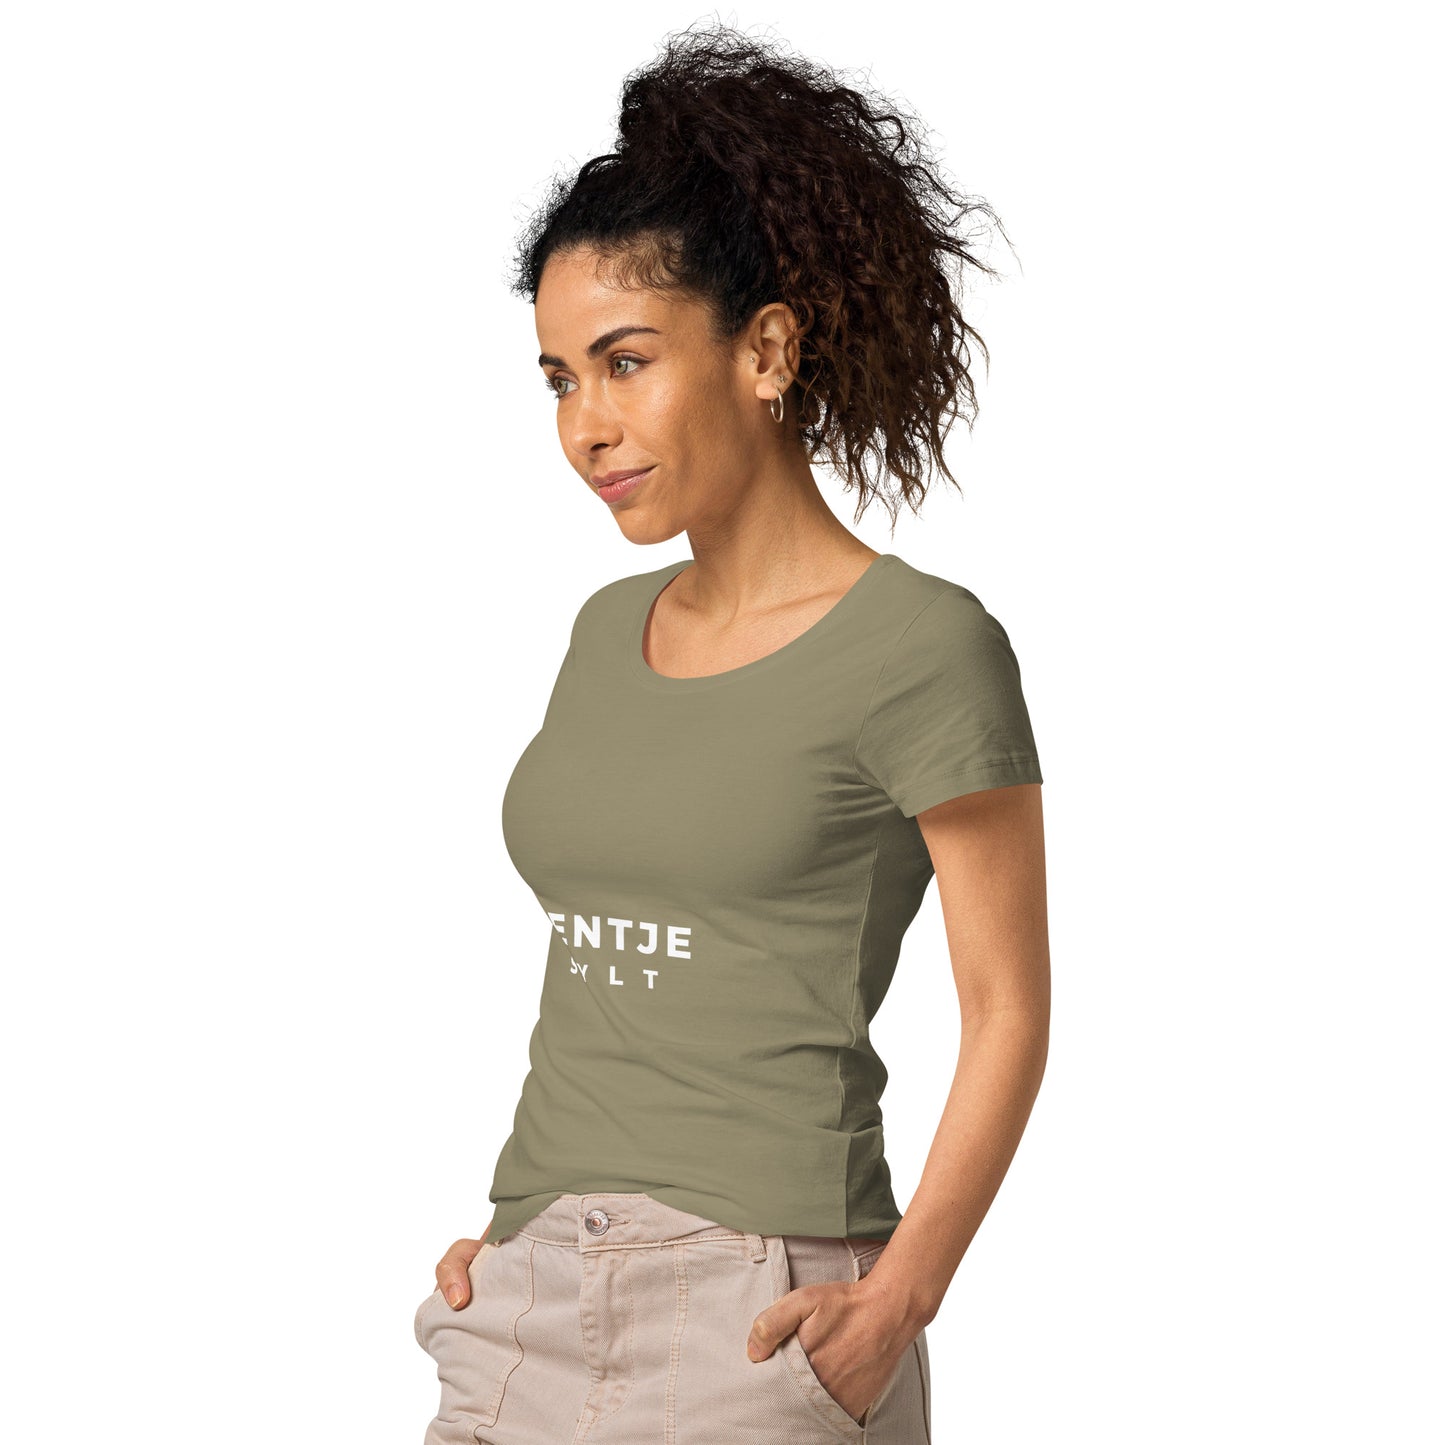 Bentje Sylt 100% Basic Bio-T-Shirt für Damen.